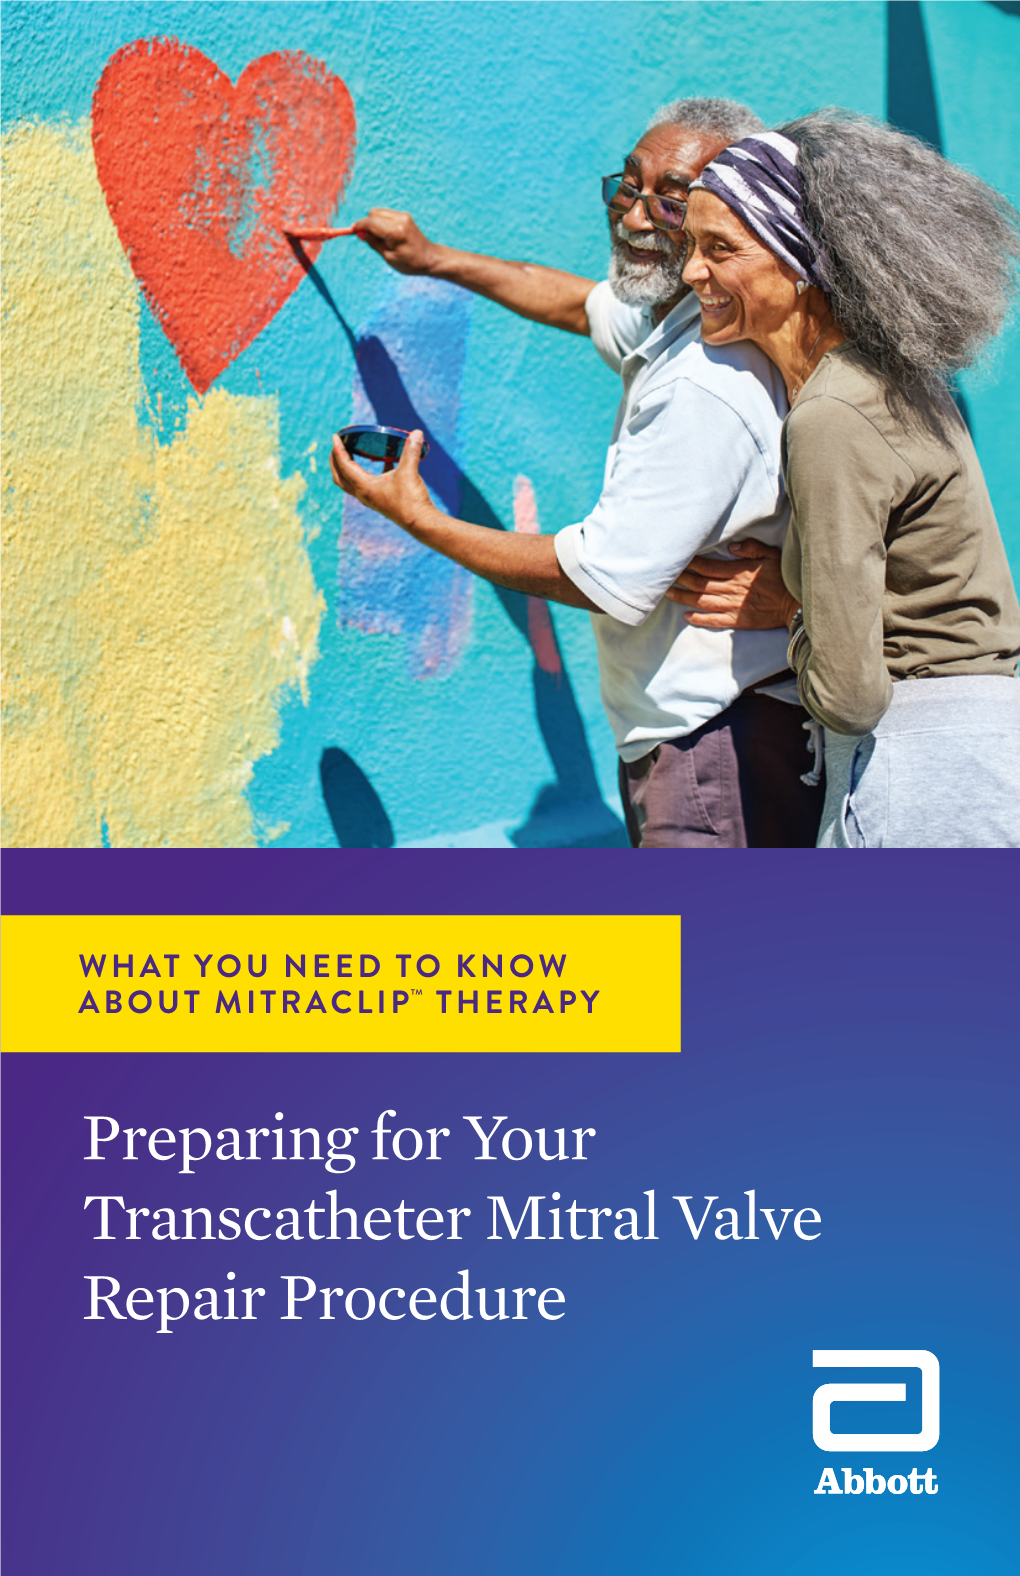 Preparing for Your Transcatheter Mitral Valve Repair Procedure